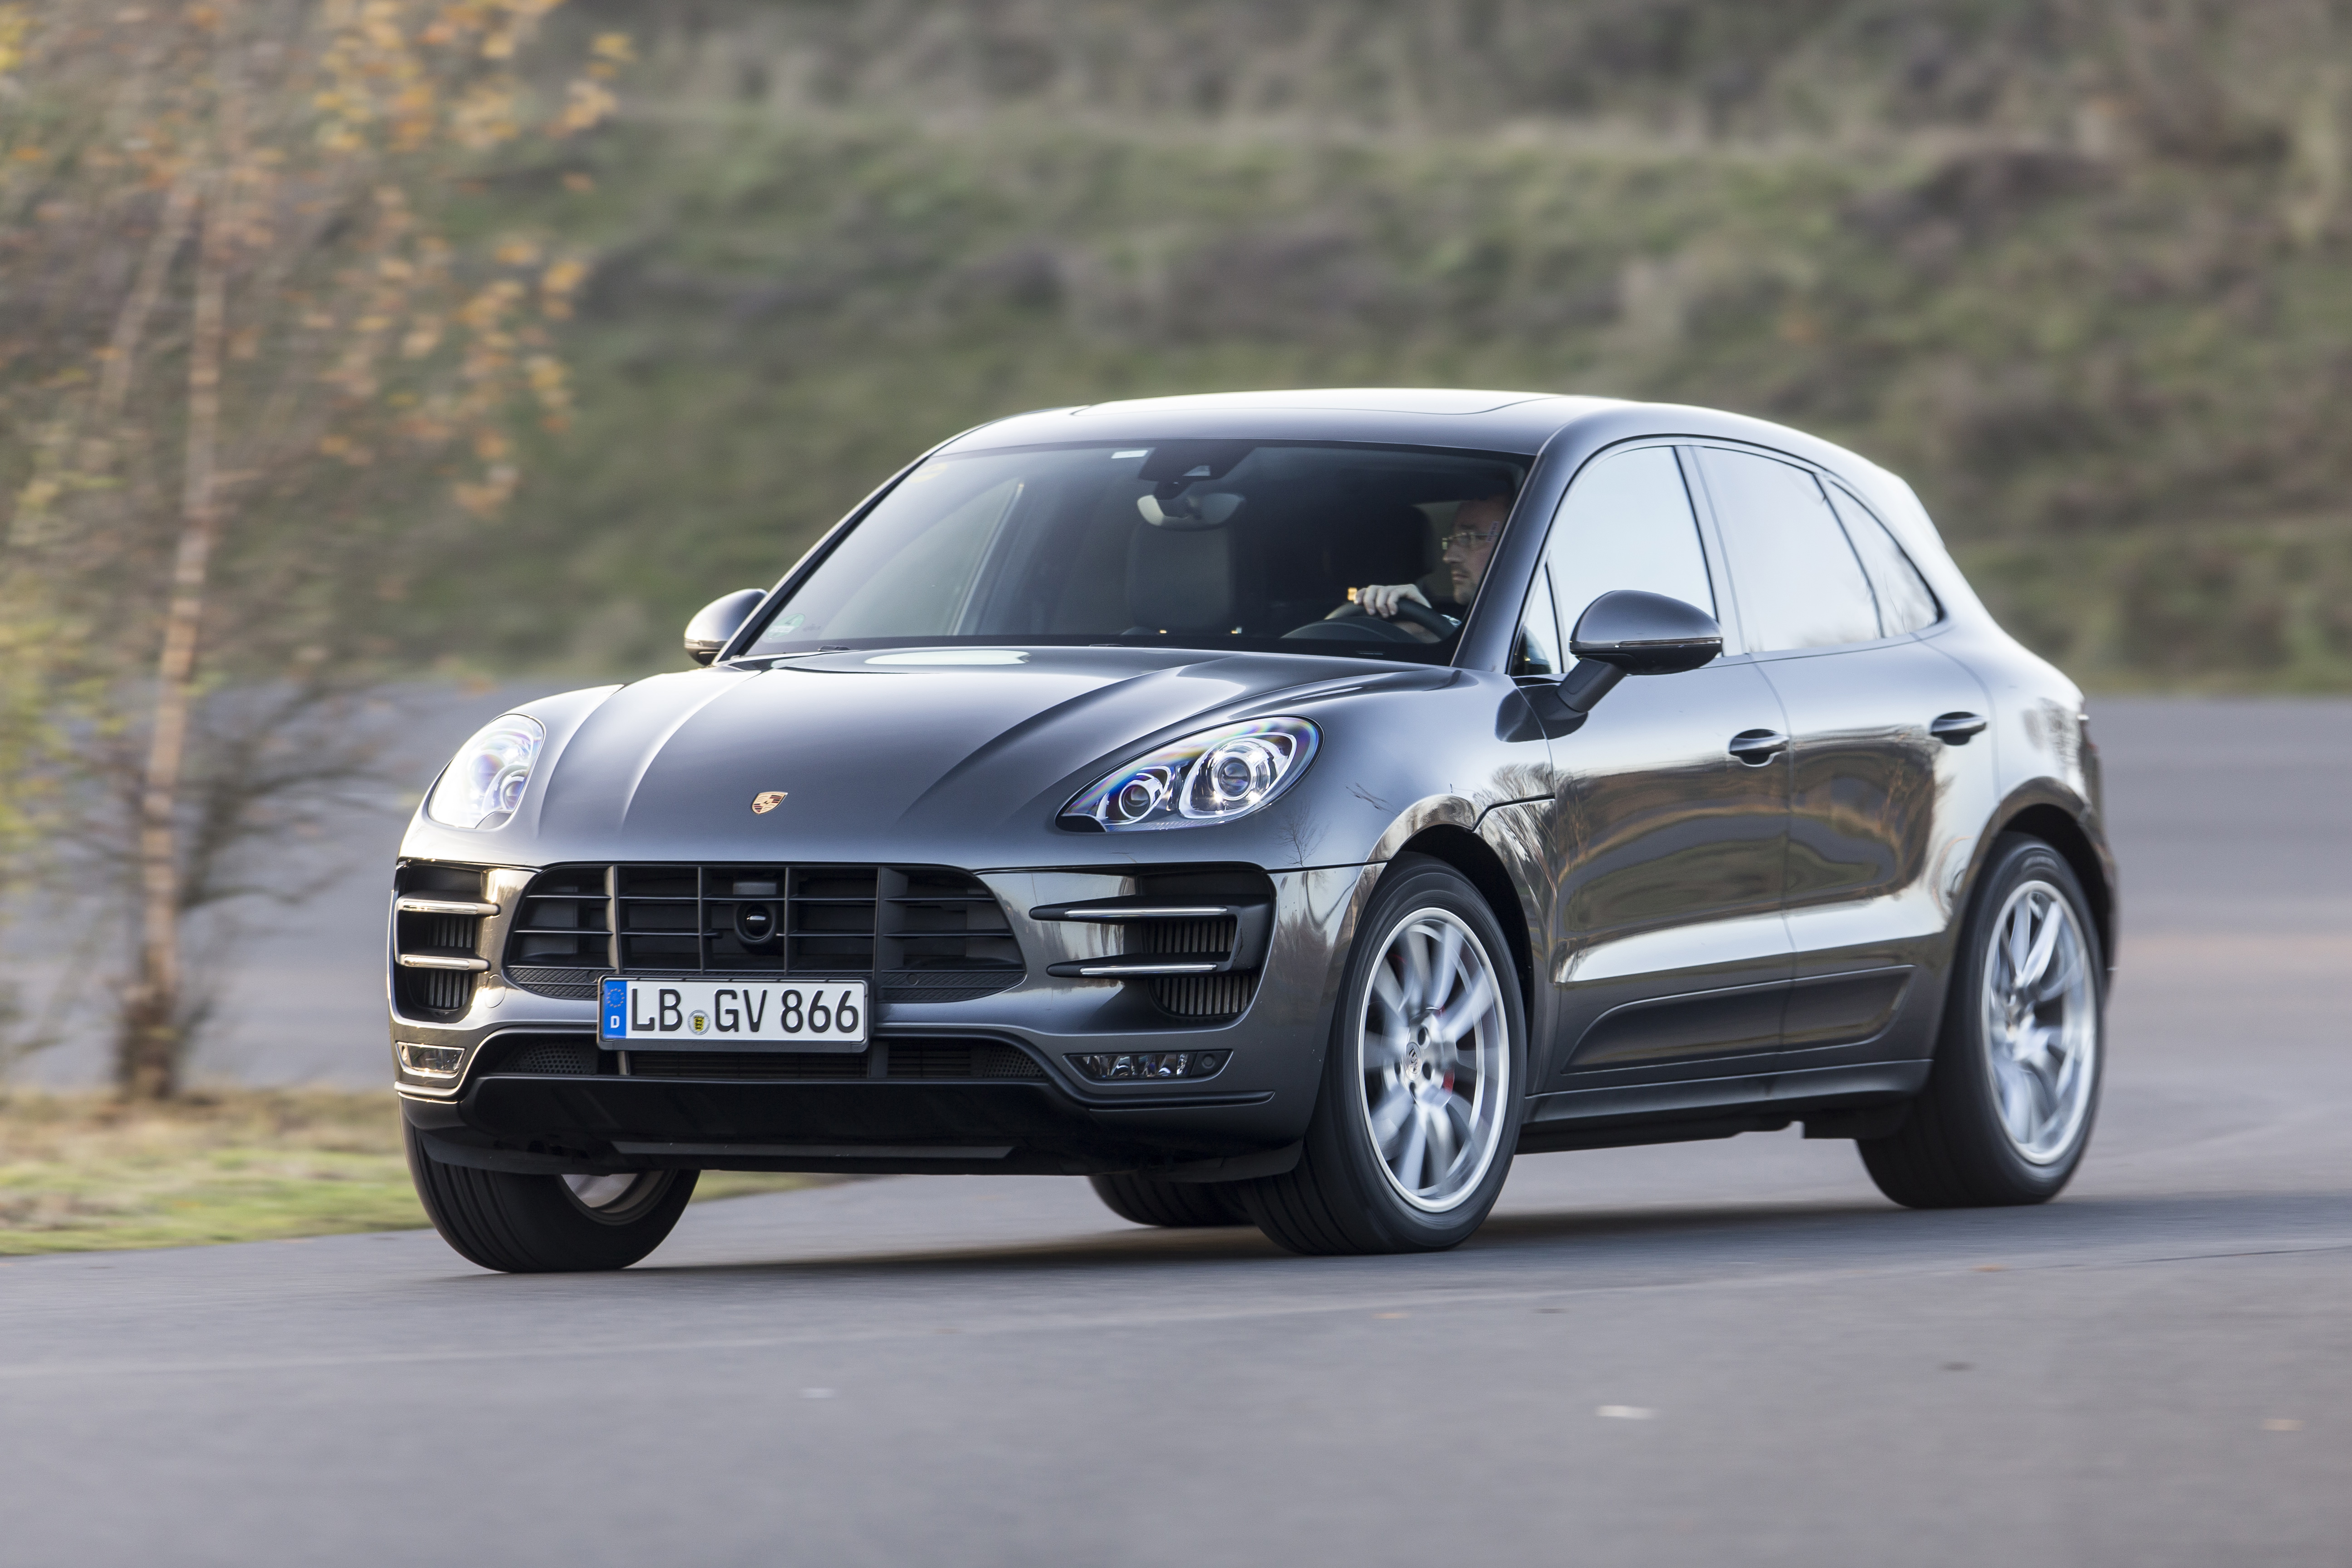 2015 Porsche Macan High Quality Background on Wallpapers Vista